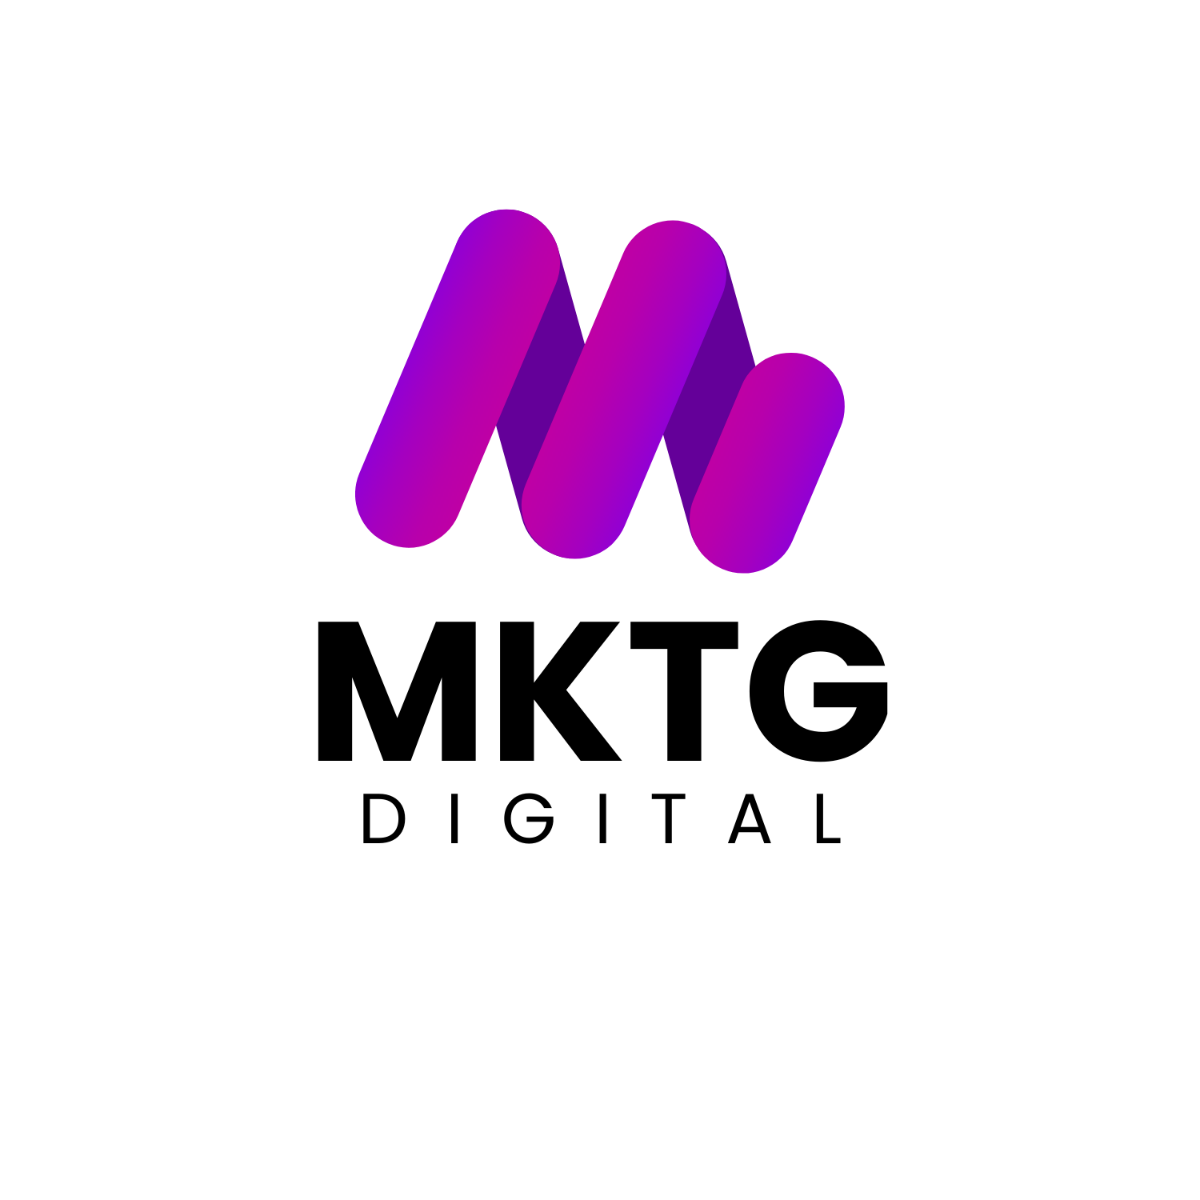 Digital Marketing Agency Primary Logo Template